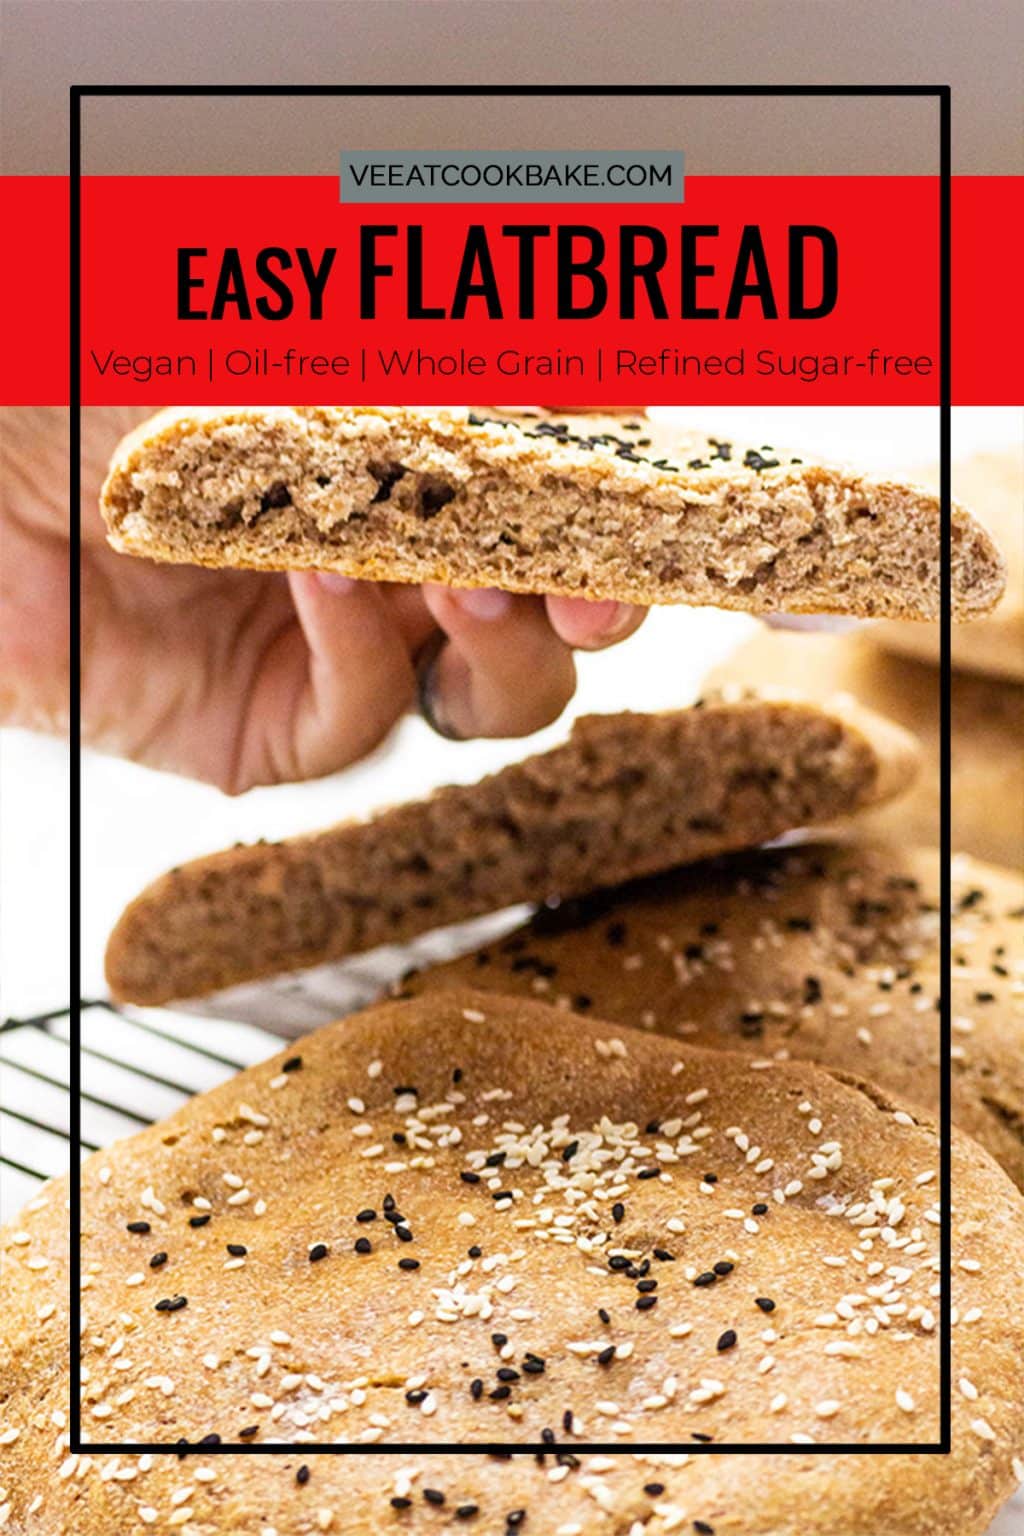 Homemade whole grain flatbread (wfpb)